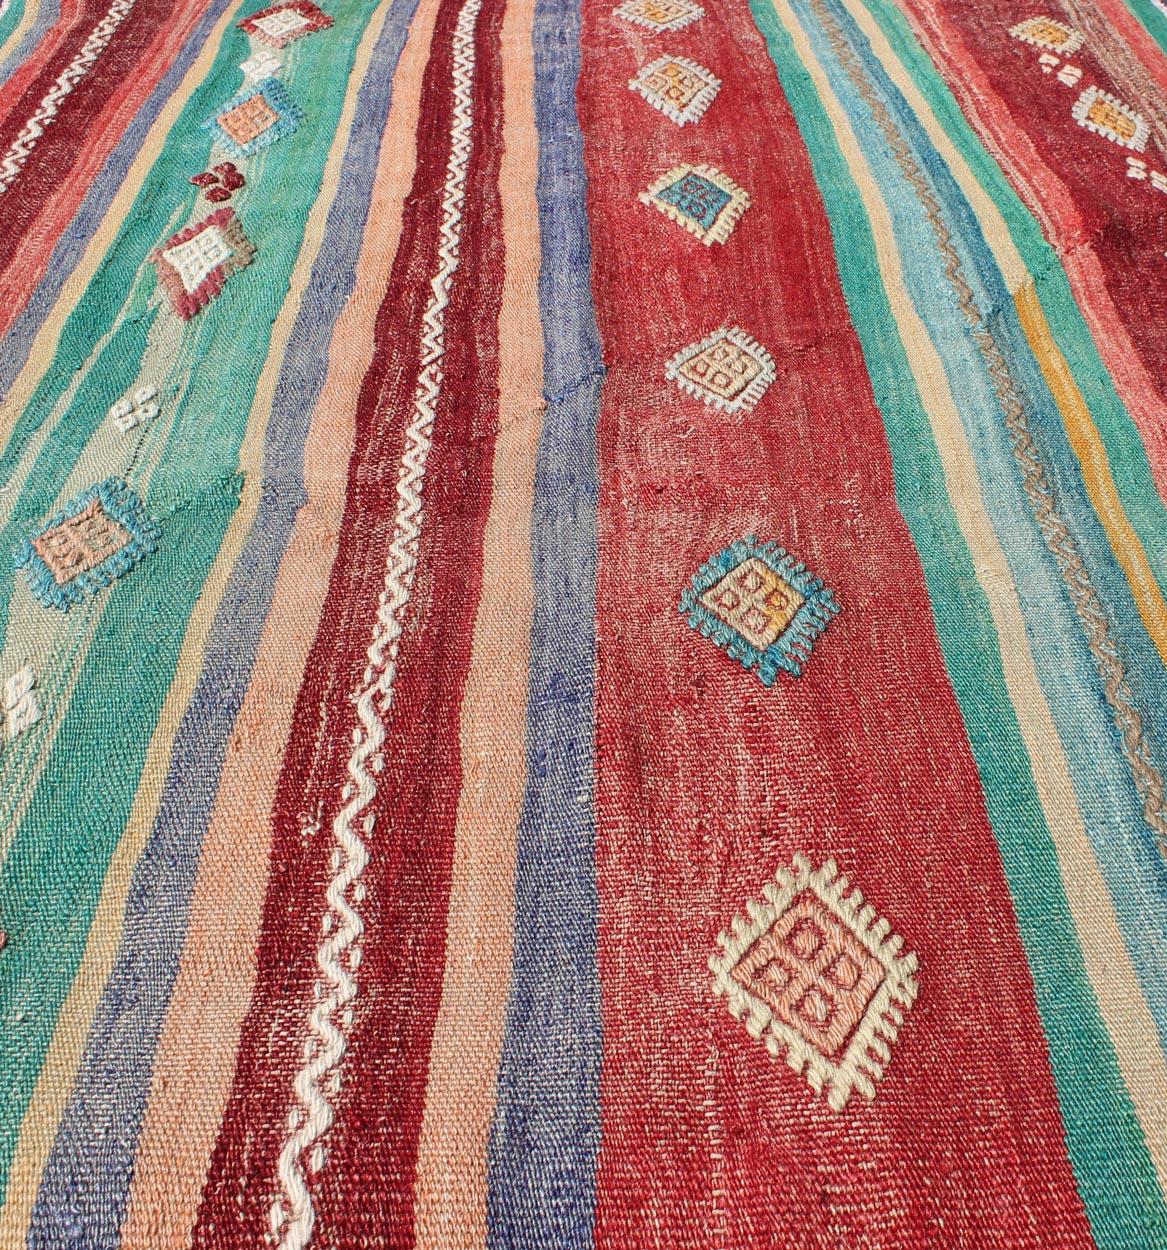 Wool Colorful Vintage Turkish Flat-Weave Kilim Rug with Striped Geometric Design